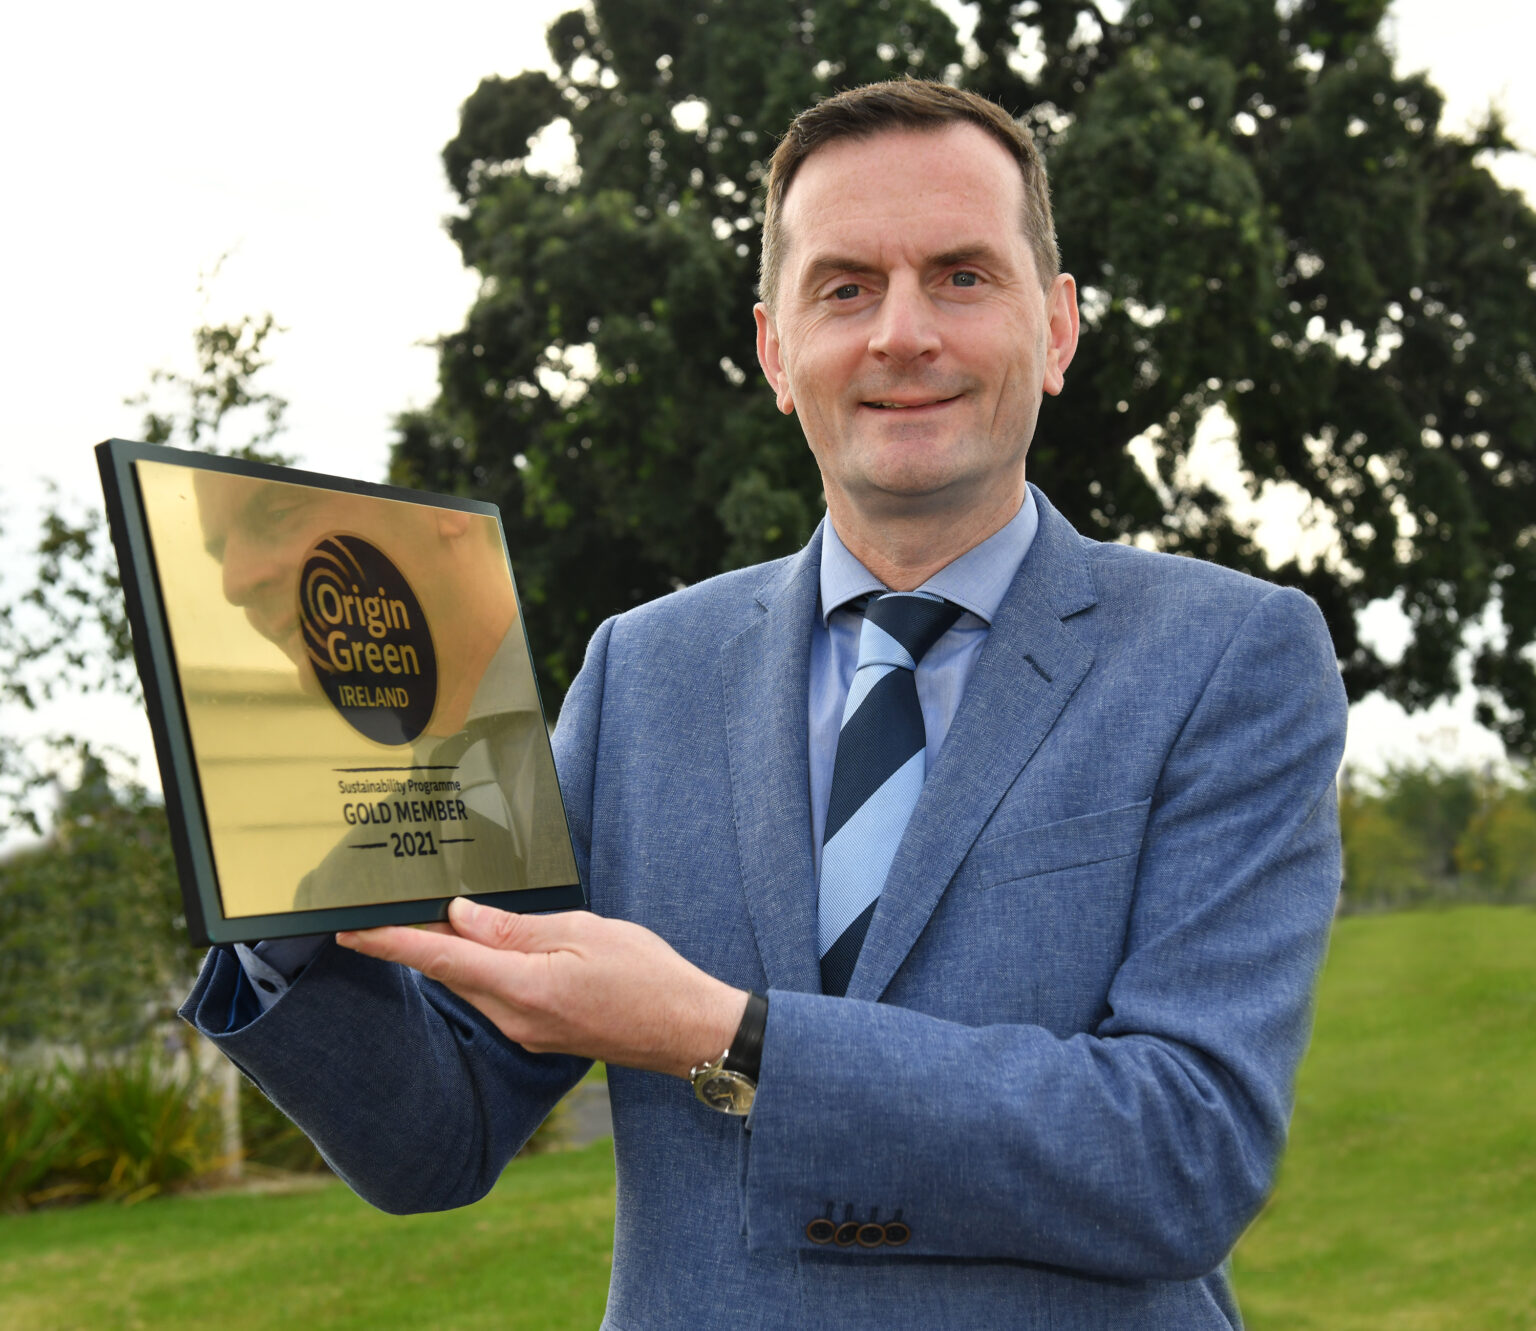 ABP's Kevin Cahill holding Origin Green Gold Member Award